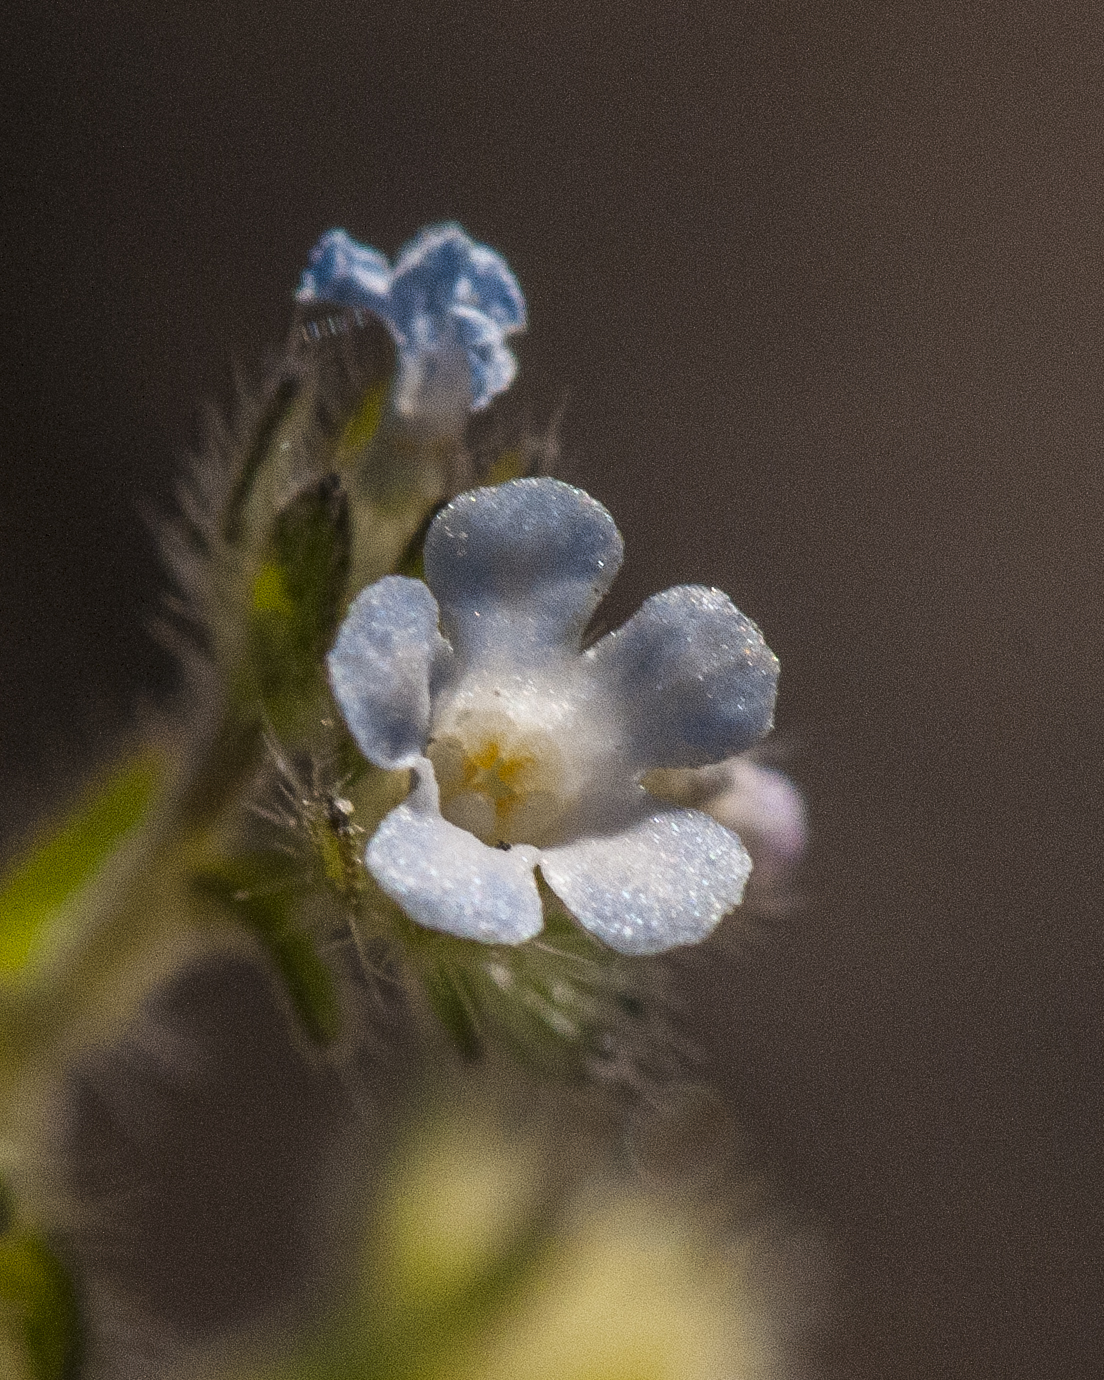 Flatspine Stickseed Flower